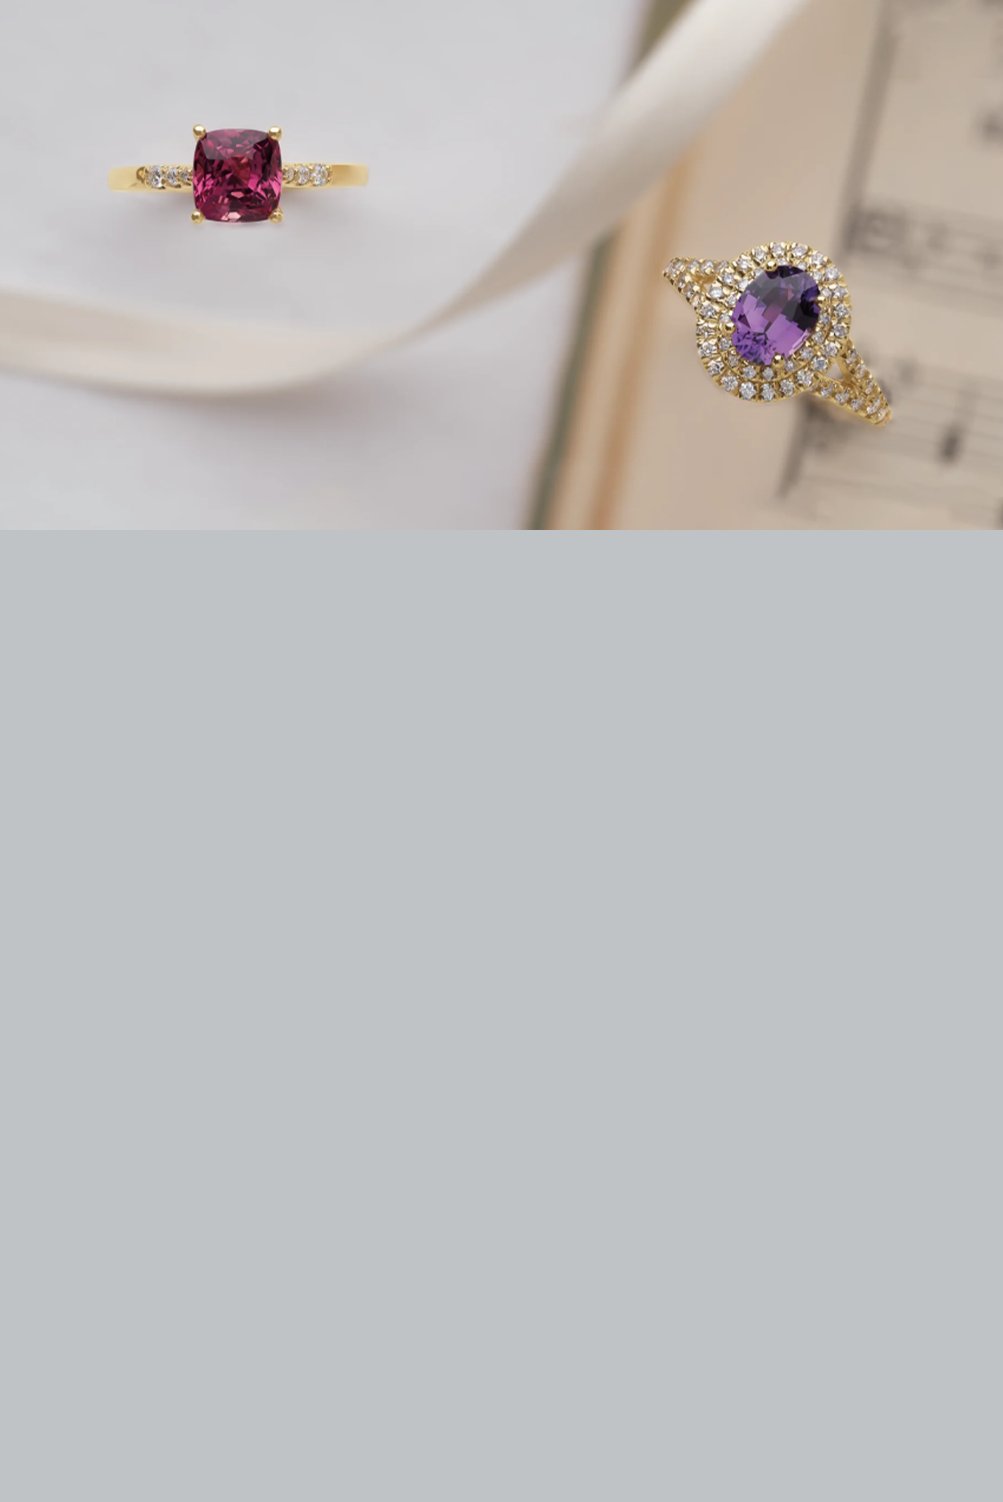 Gemstones Jewelry Engagements